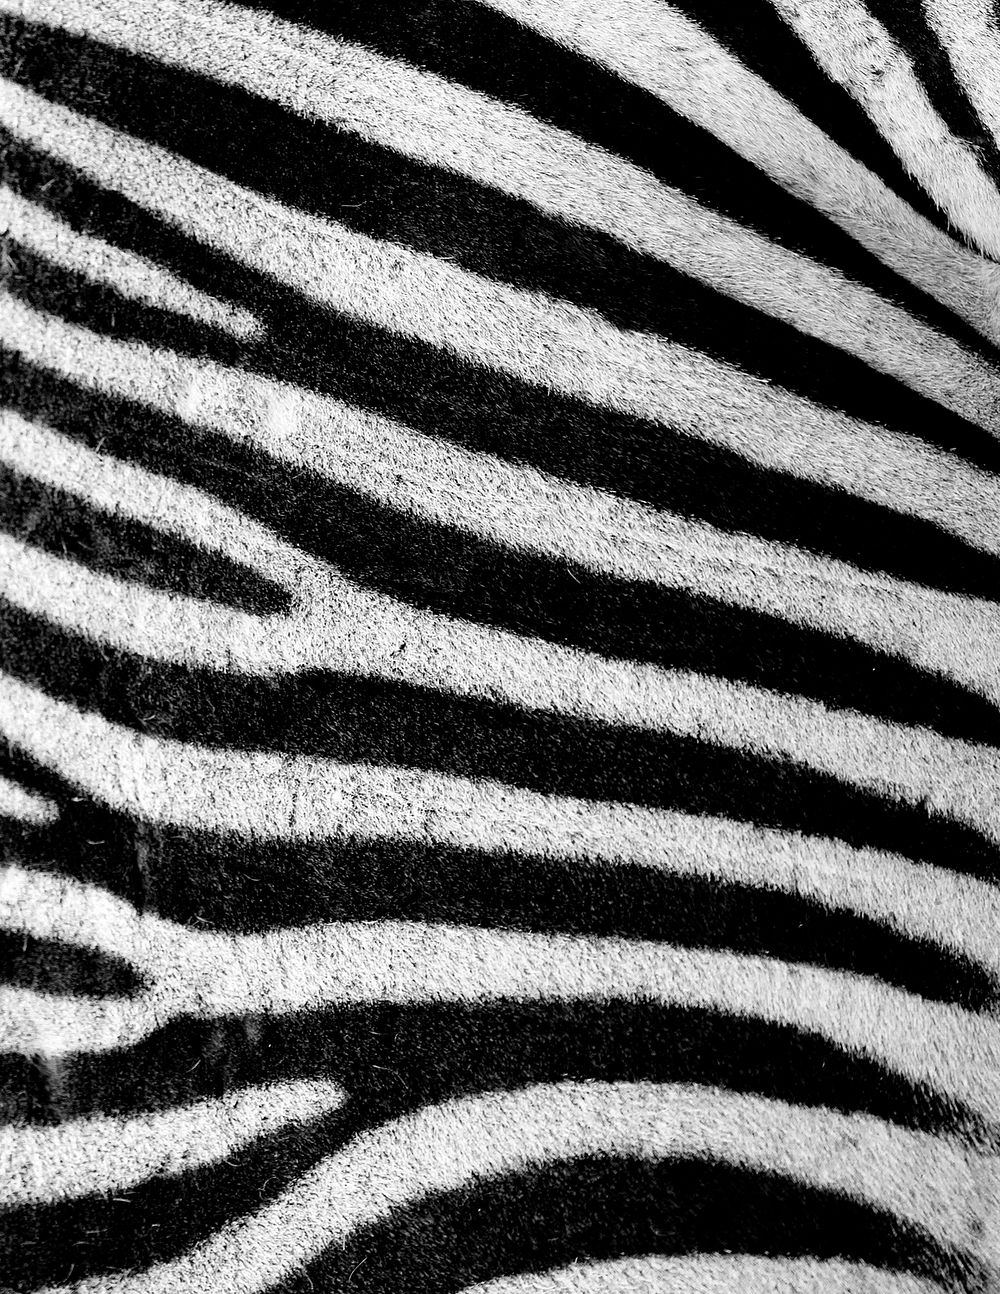 Zebra pattern, black and white stripe background